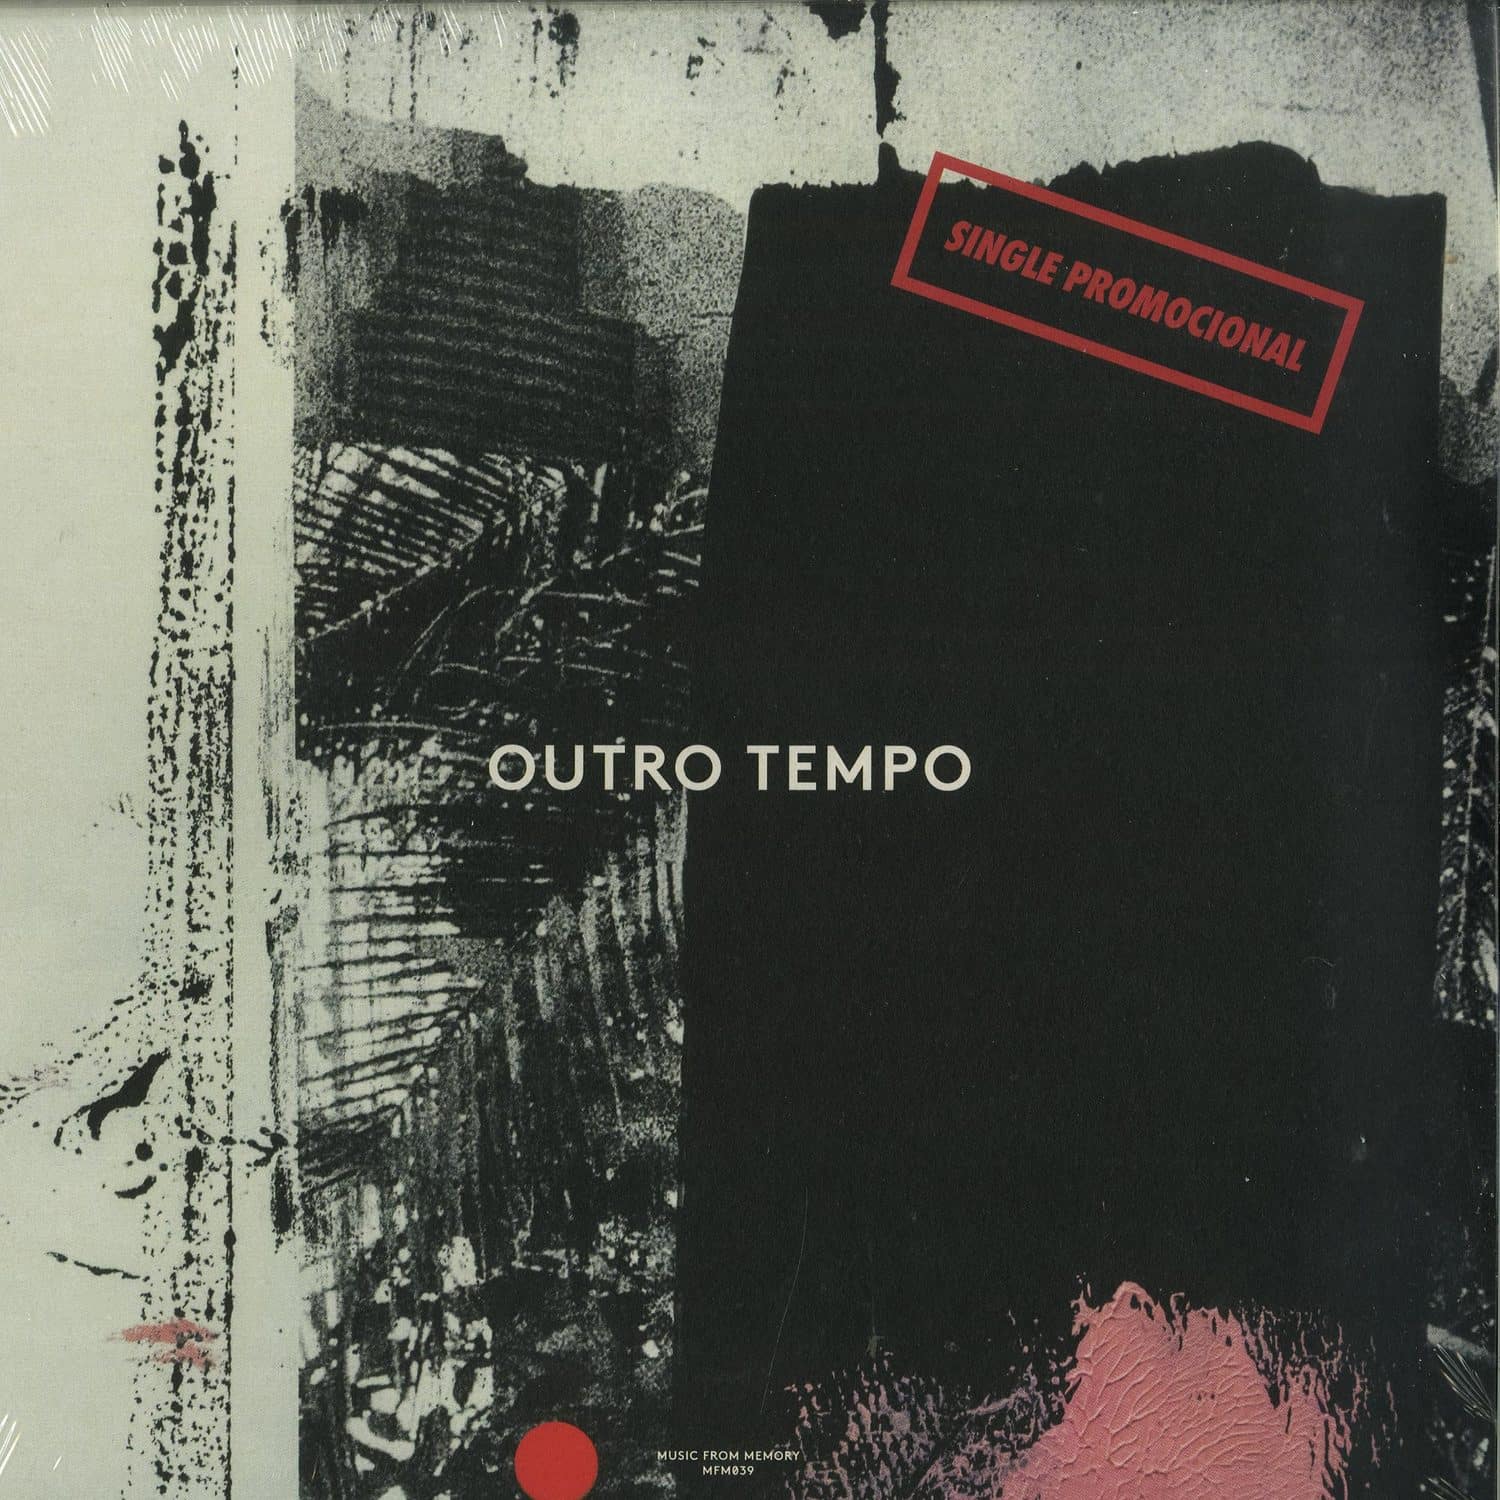 Various Artists - OUTRO TEMPO - SINGLE PROMOCIONAL